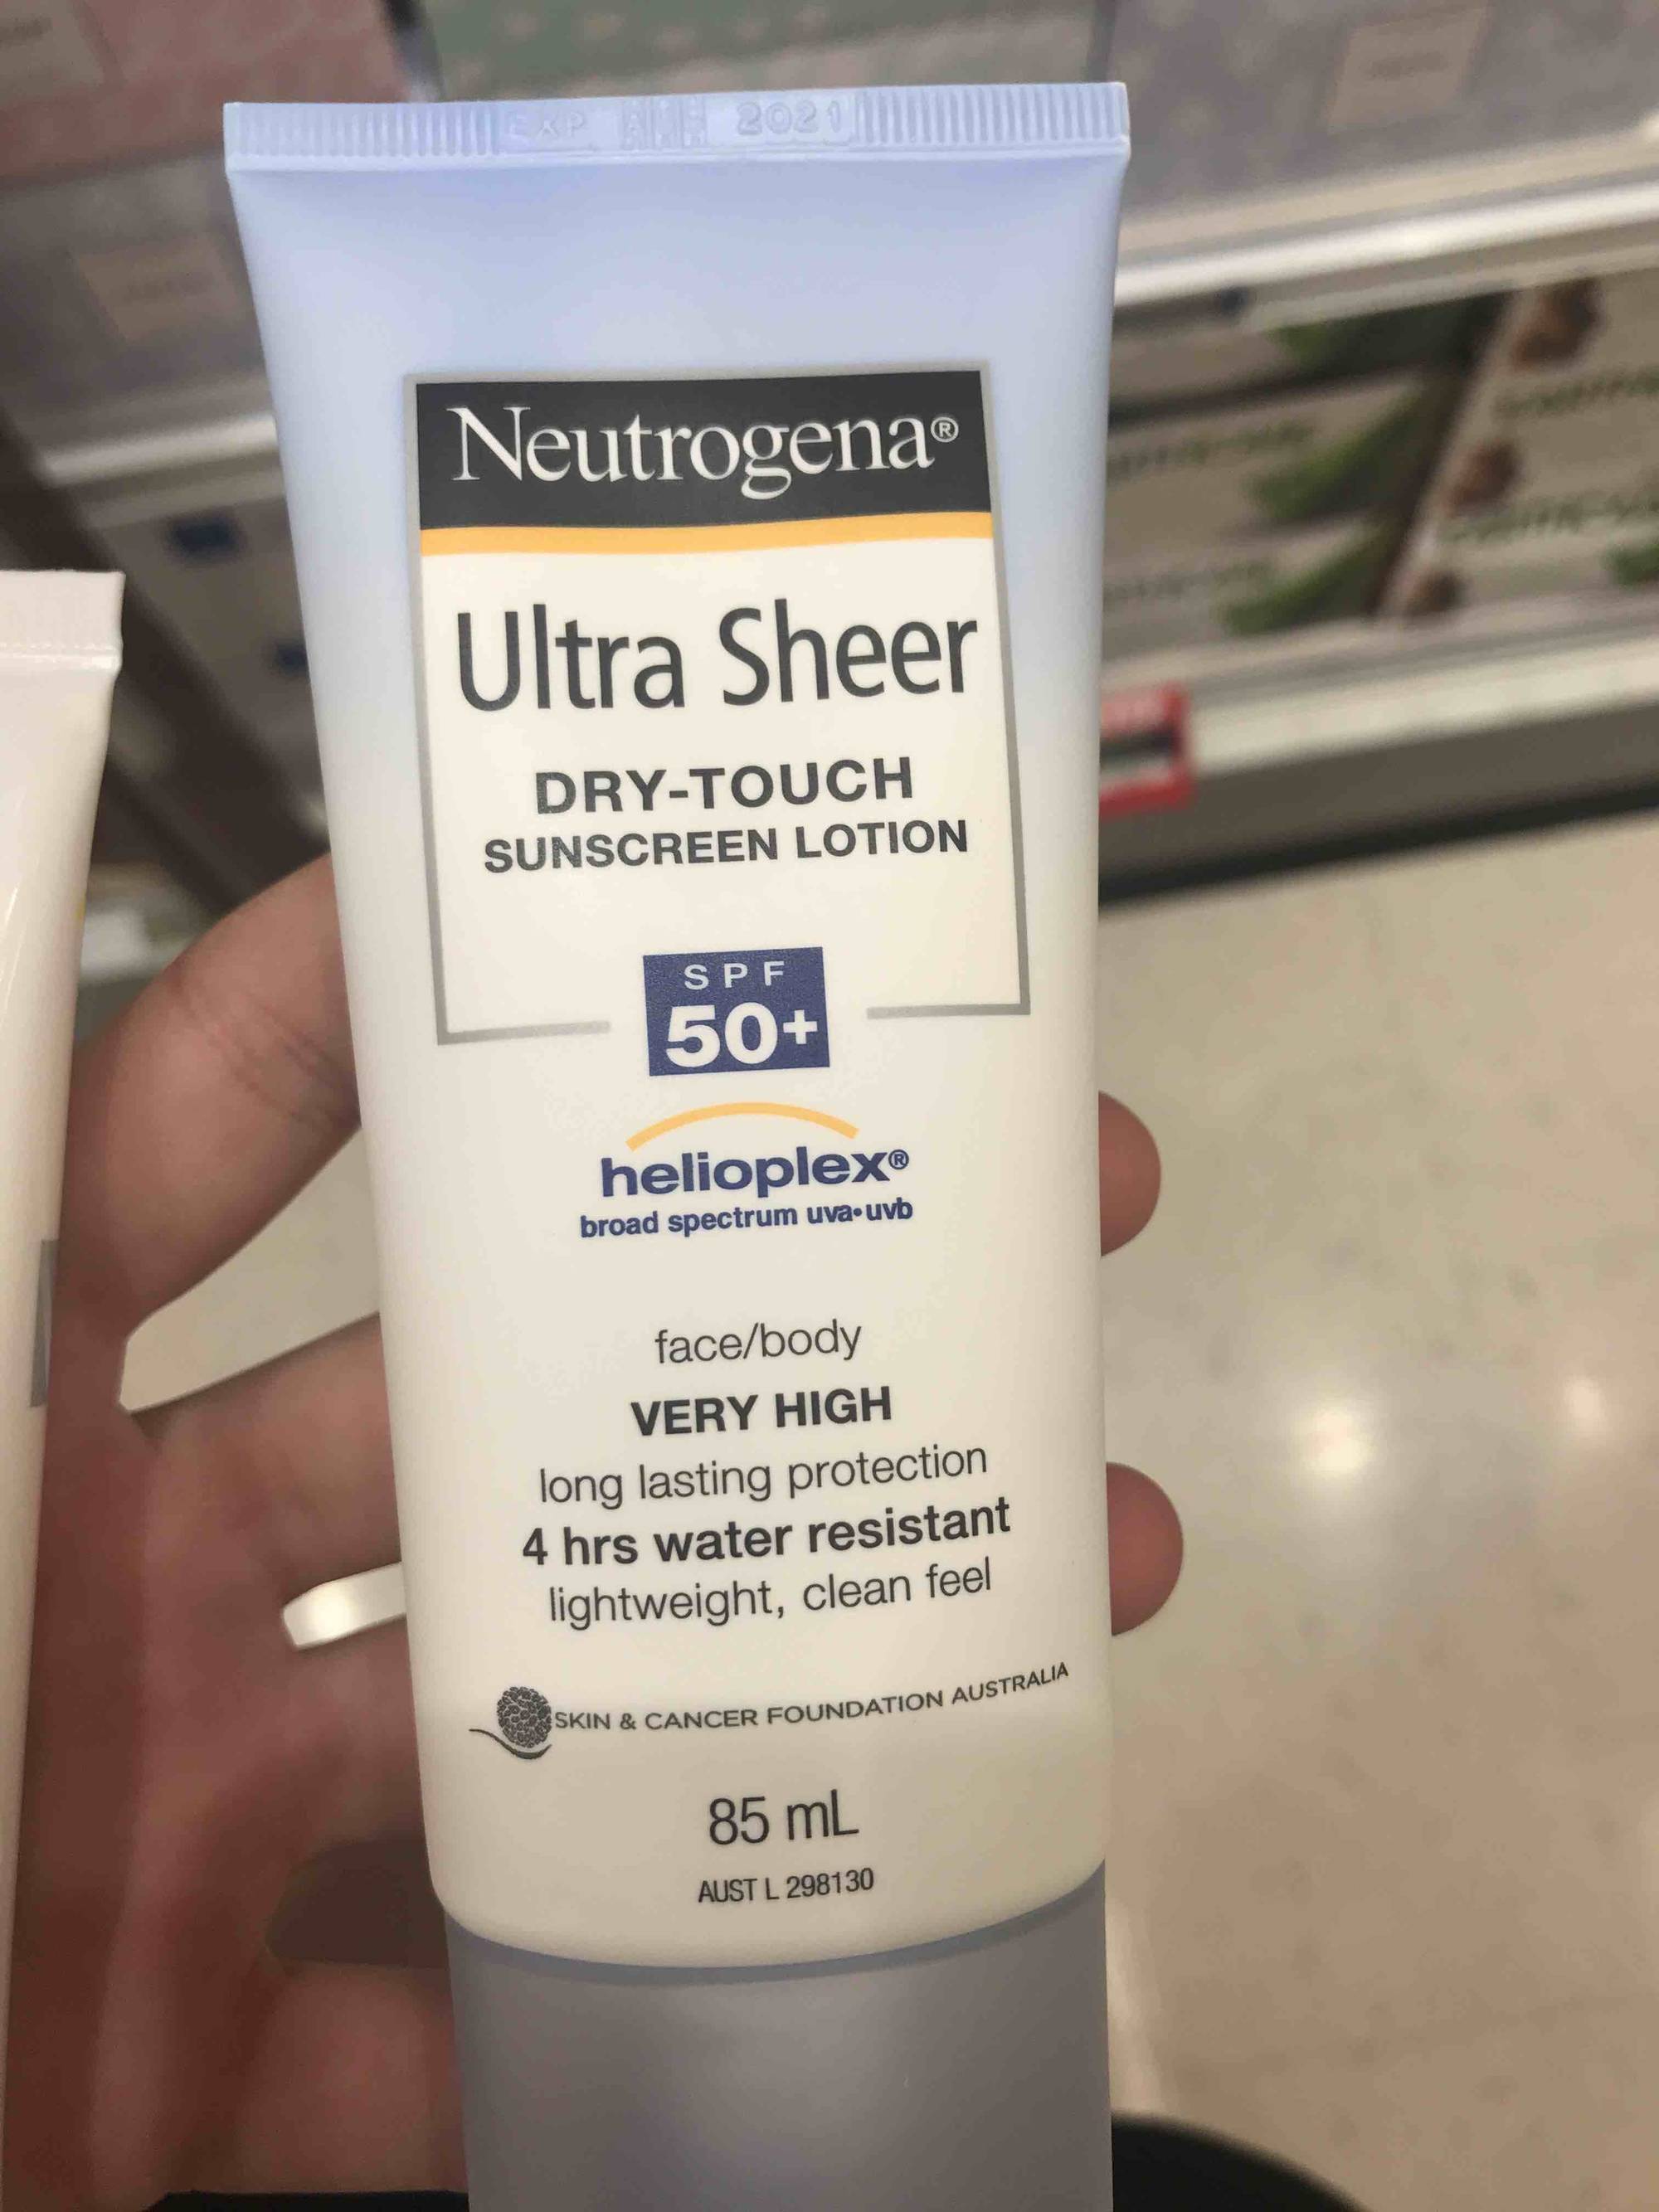 NEUTROGENA - Ultra sheer - Dry-touch, sunscreen lotion SPF 50+, face/body